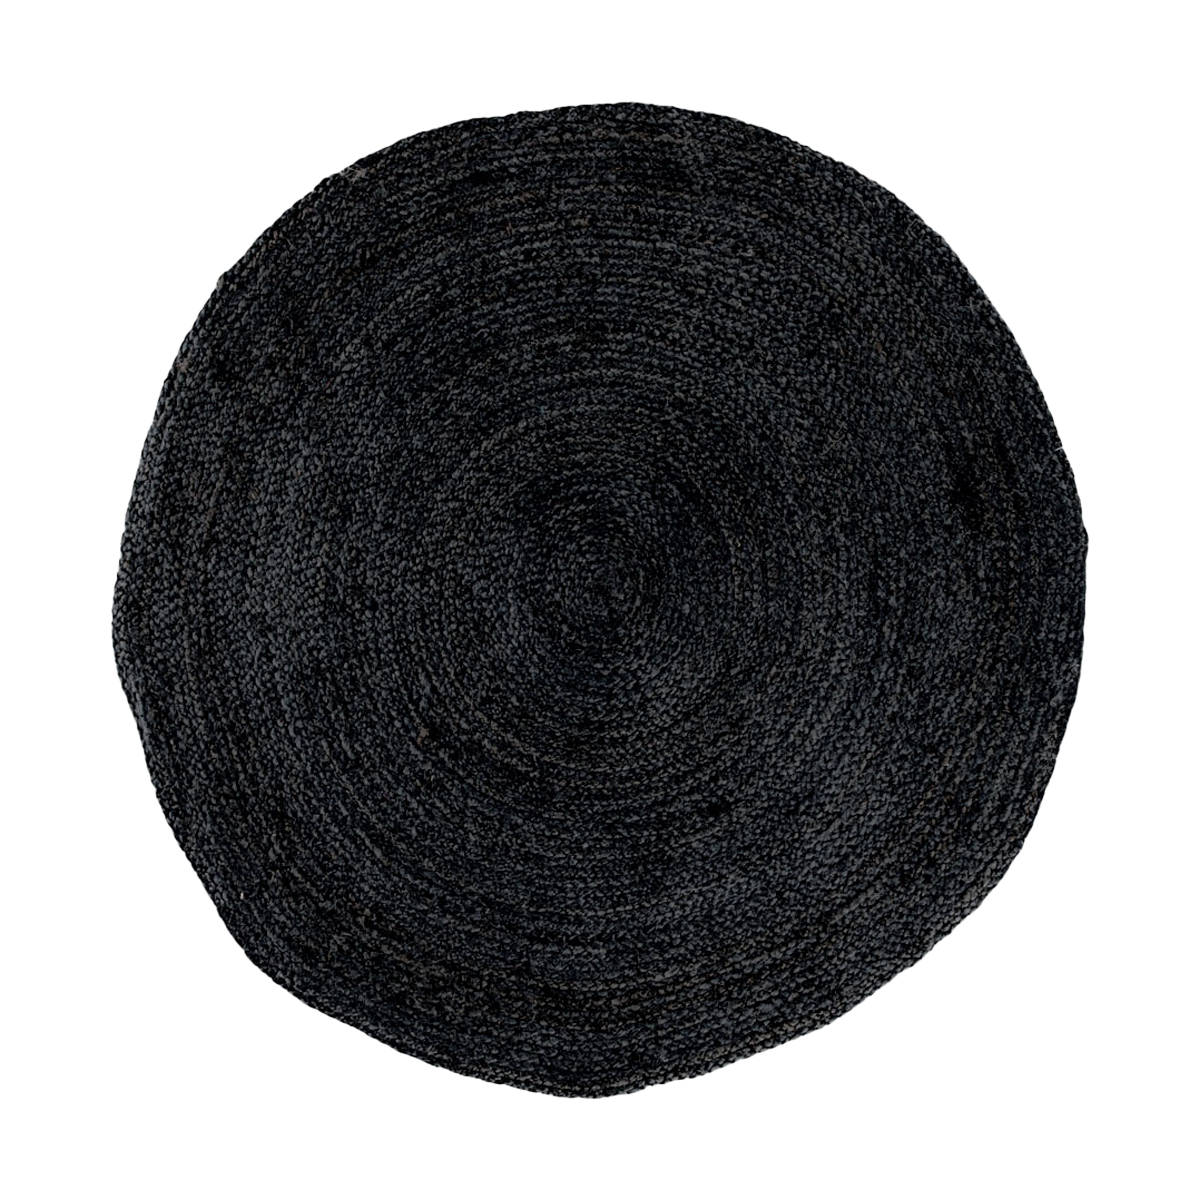 Milou jute vloerkleed donkergrijs - Ø 180 cm